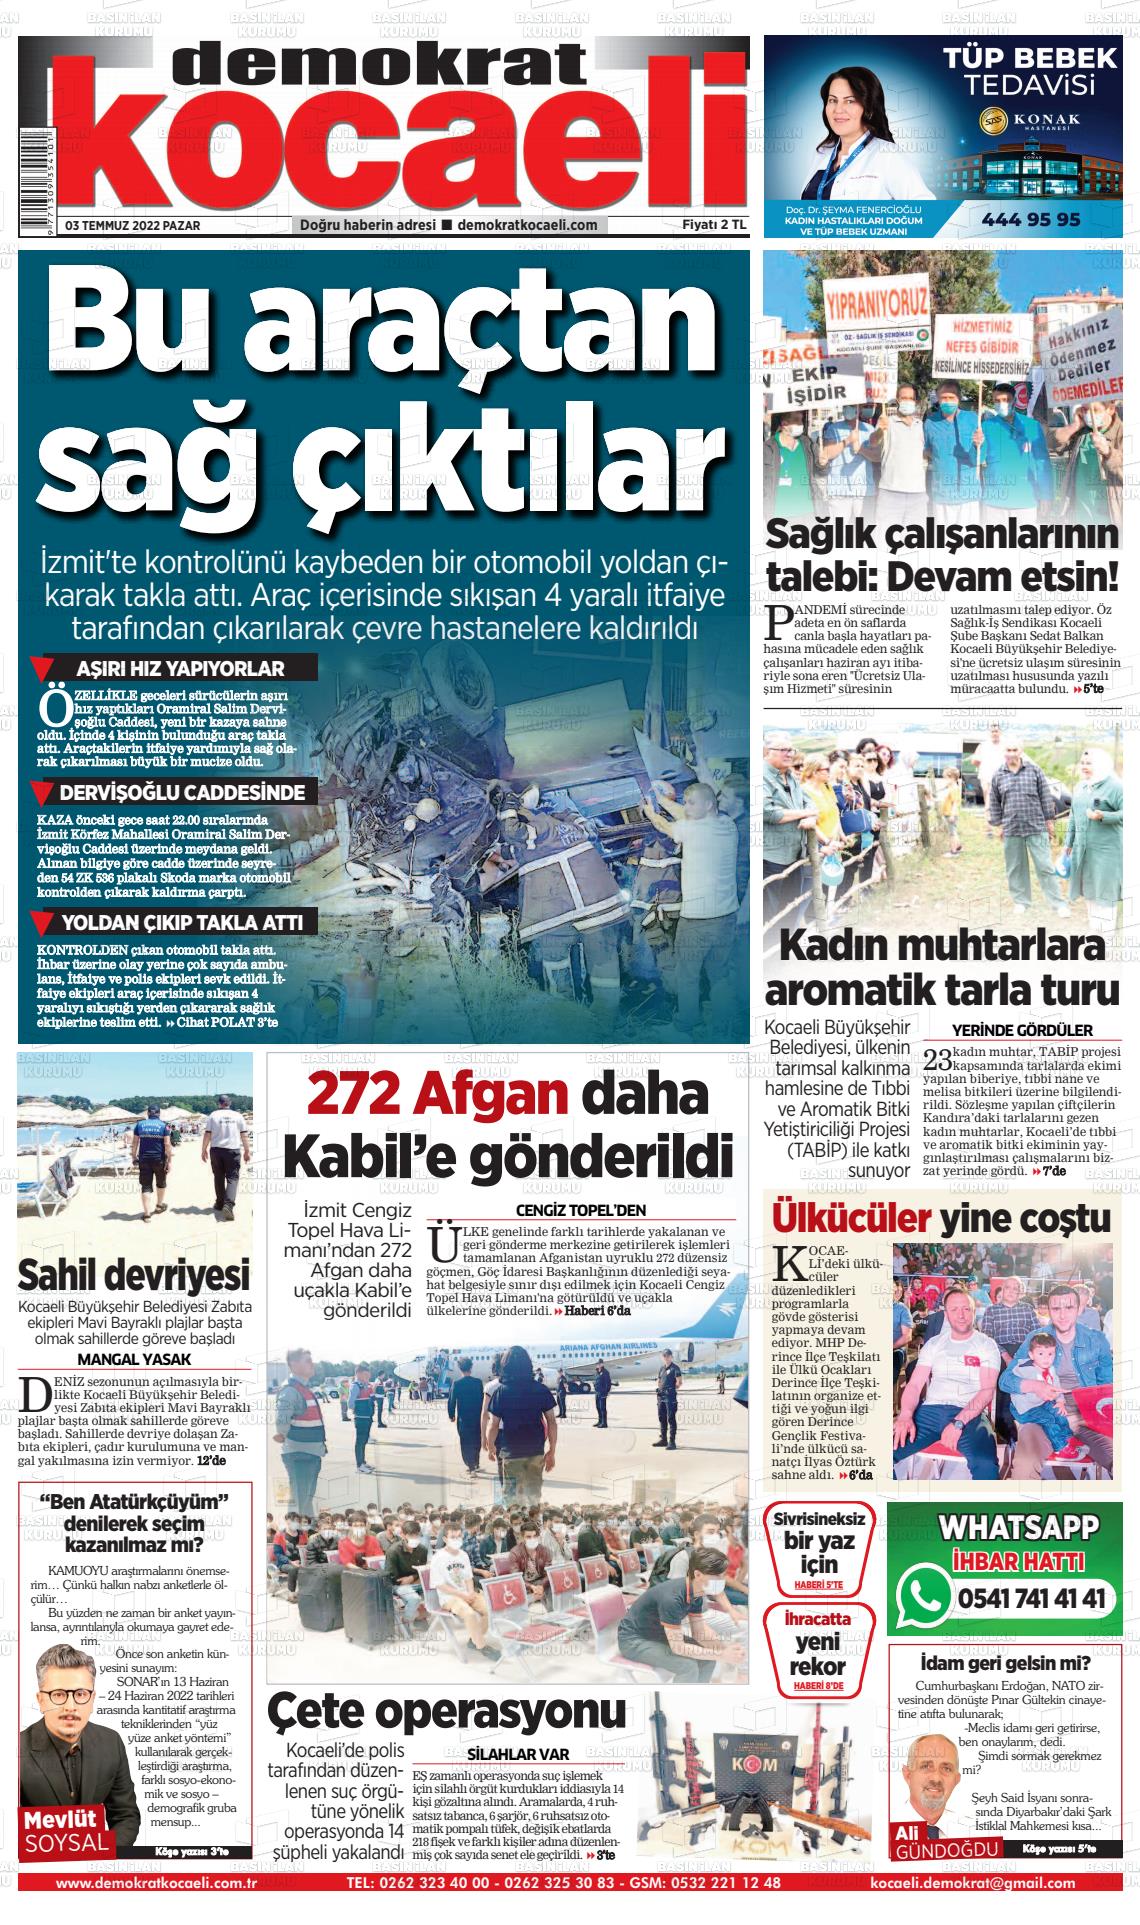 03 Temmuz 2022 Demokrat Kocaeli Gazete Manşeti